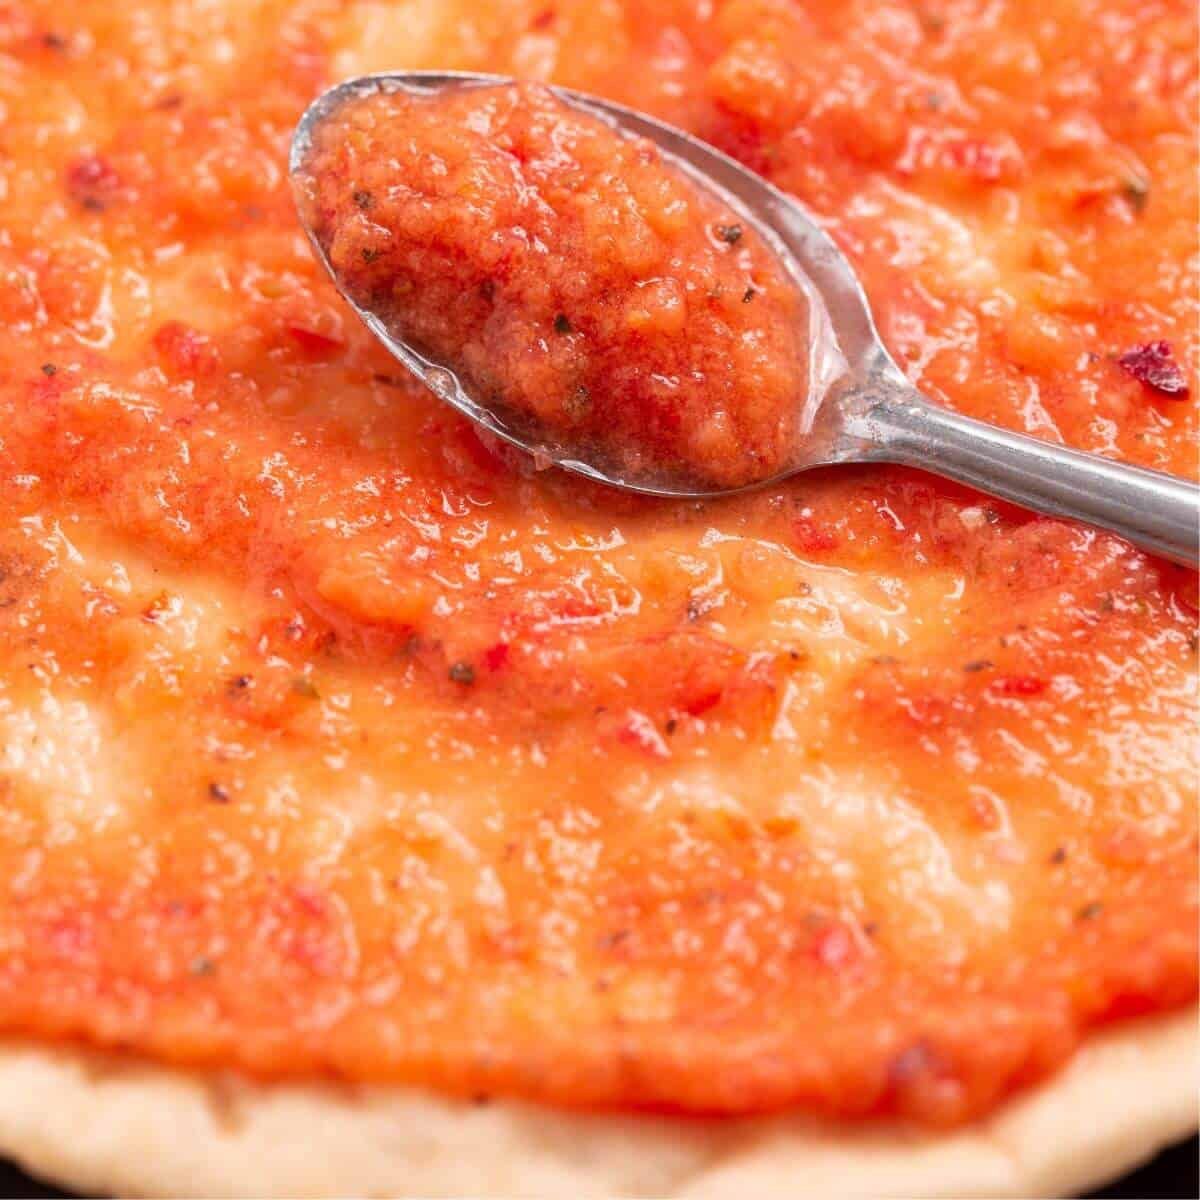 sauce on spoon spreading onto pizza crust.